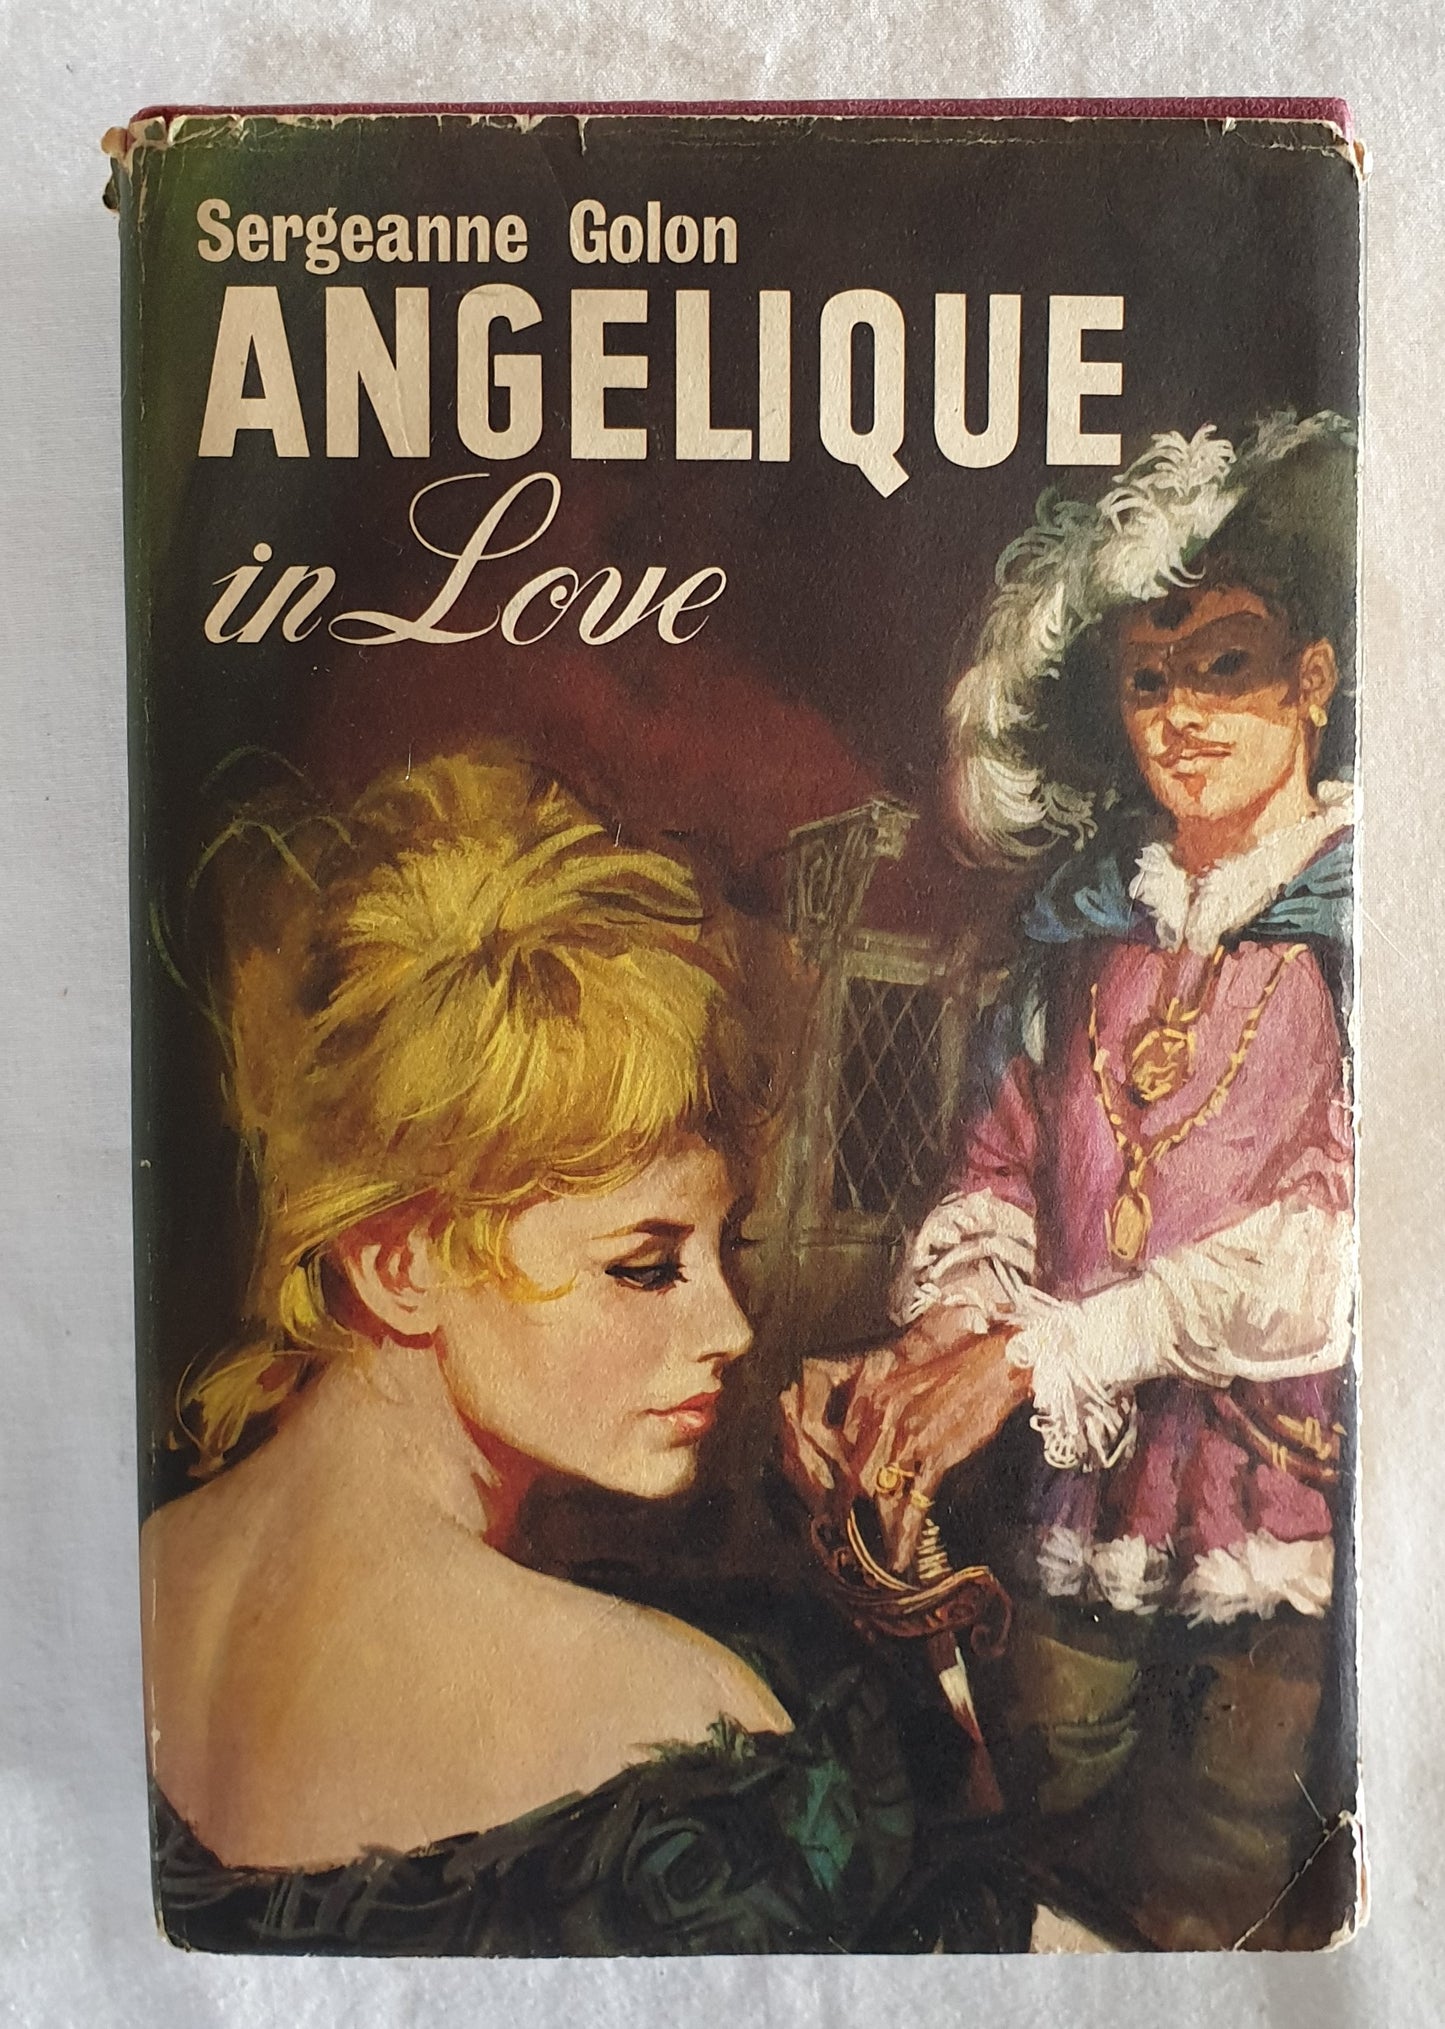 Angelique in Love by Sergeanne Golon